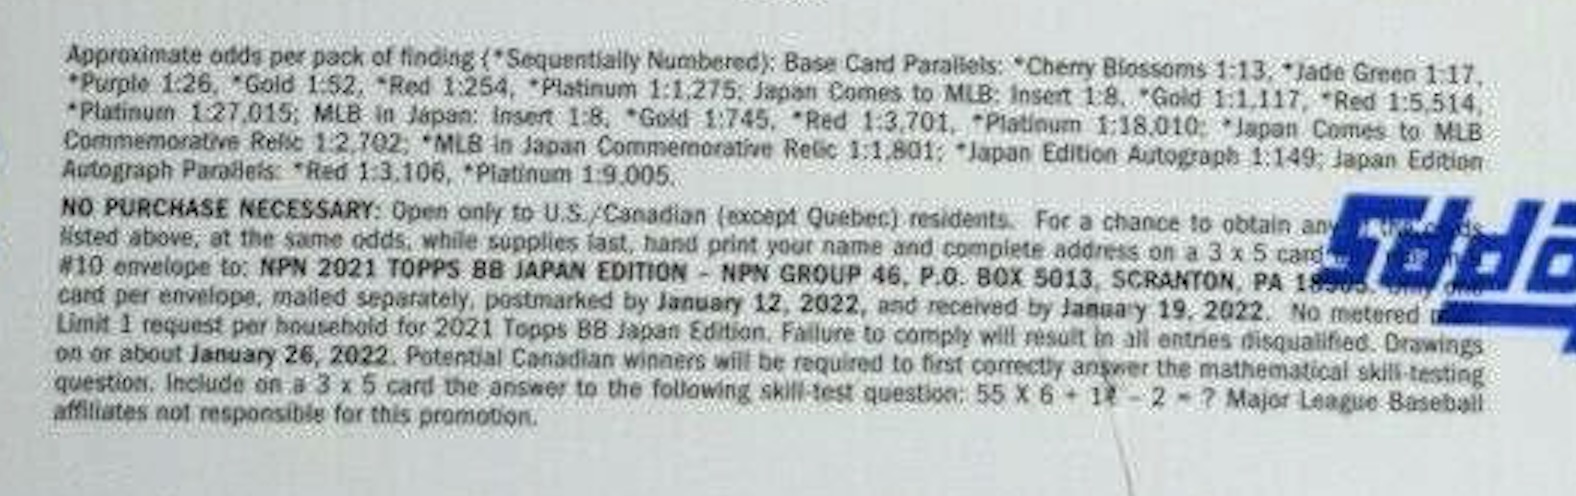 2021 Topps Baseball Japan Edition Cards - Hobby Box - No Purchase Necessary (NPN) Information